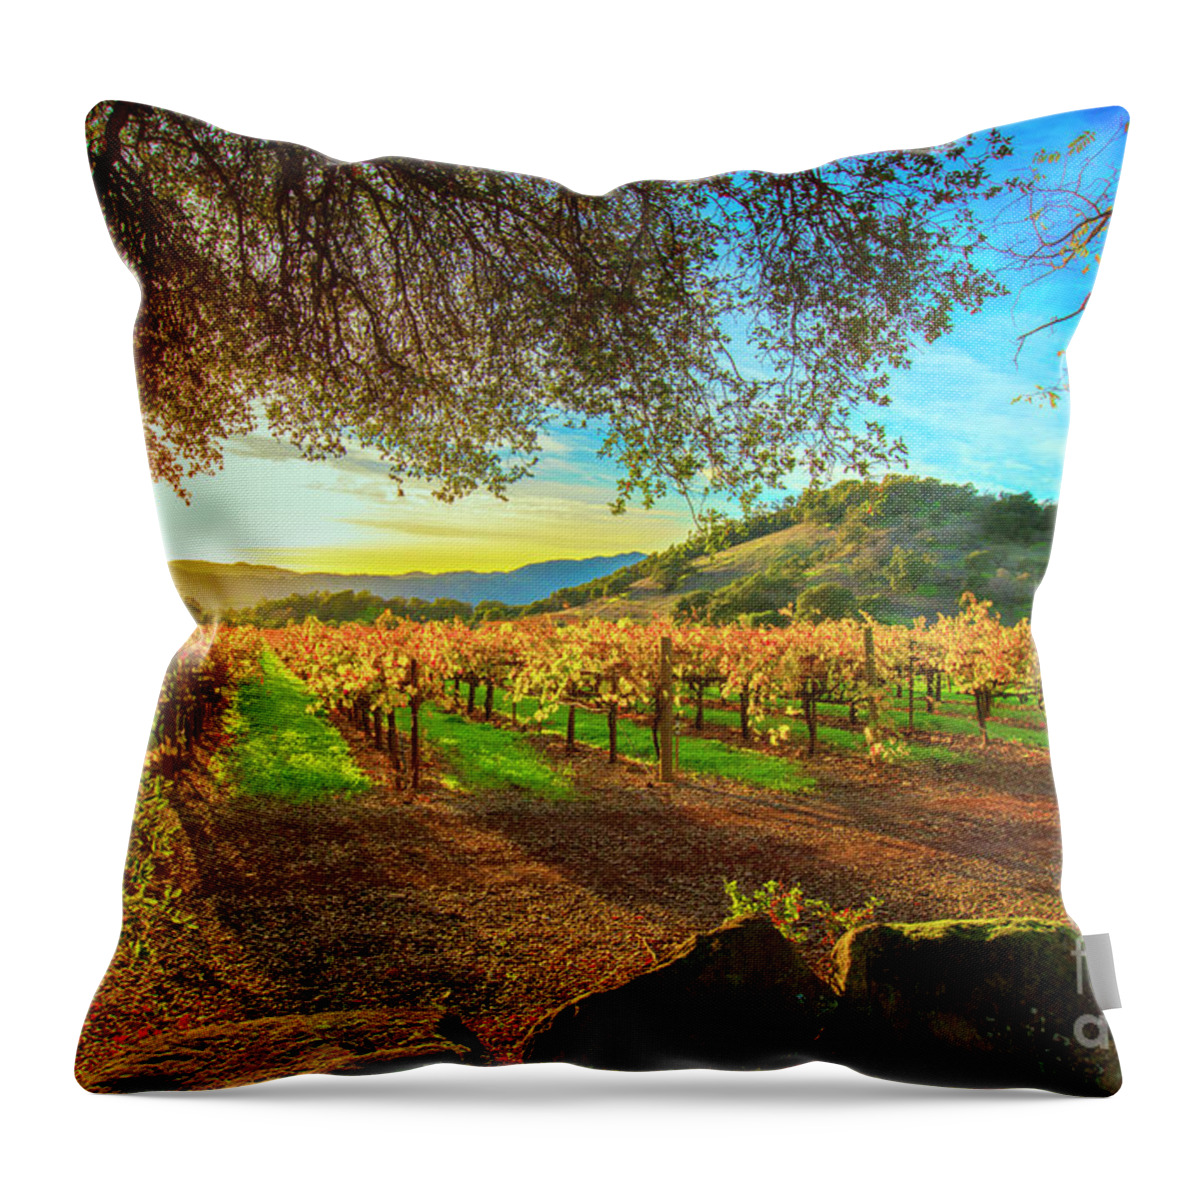 Napa Throw Pillow featuring the photograph Sunset over Napa by Jon Neidert